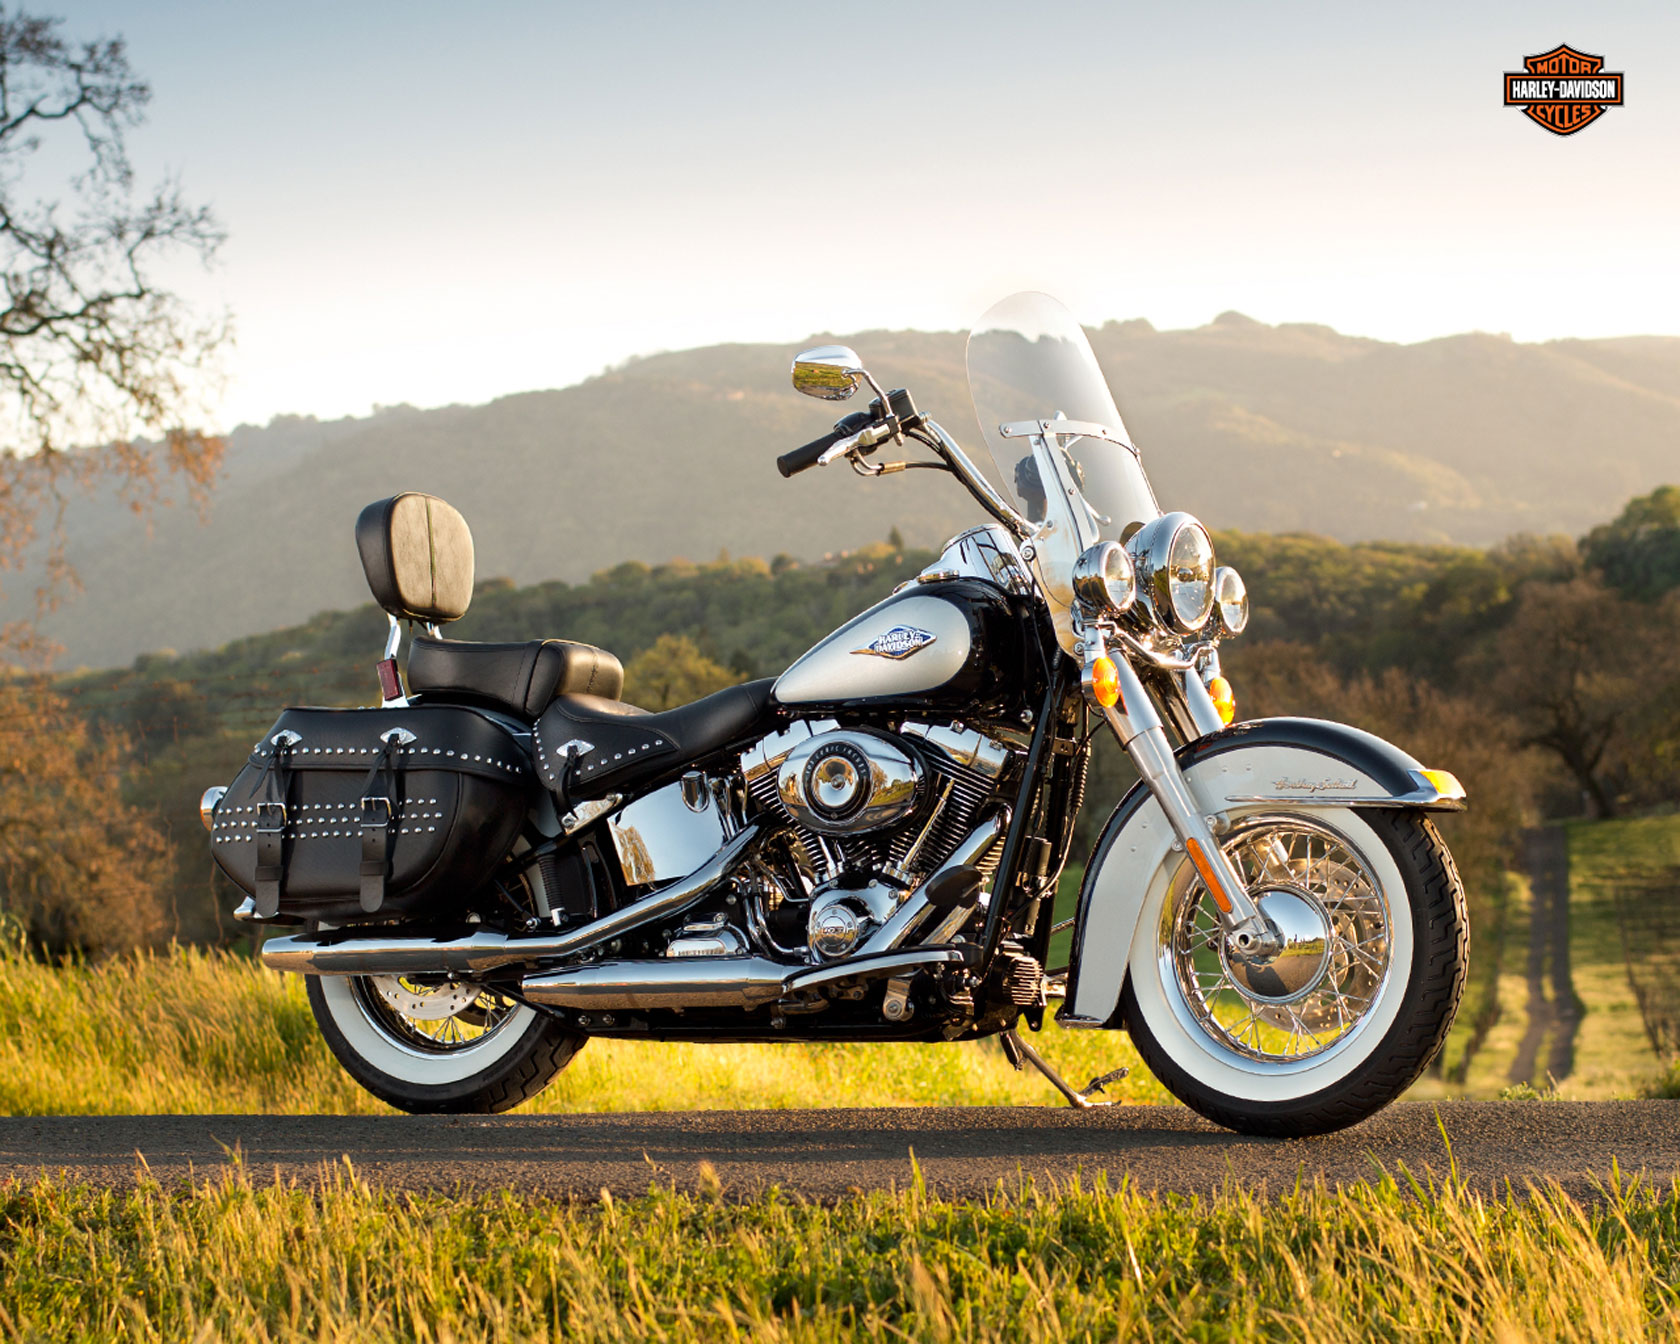 2013 Harley Davidson Flstc Heritage Softail Classic Review